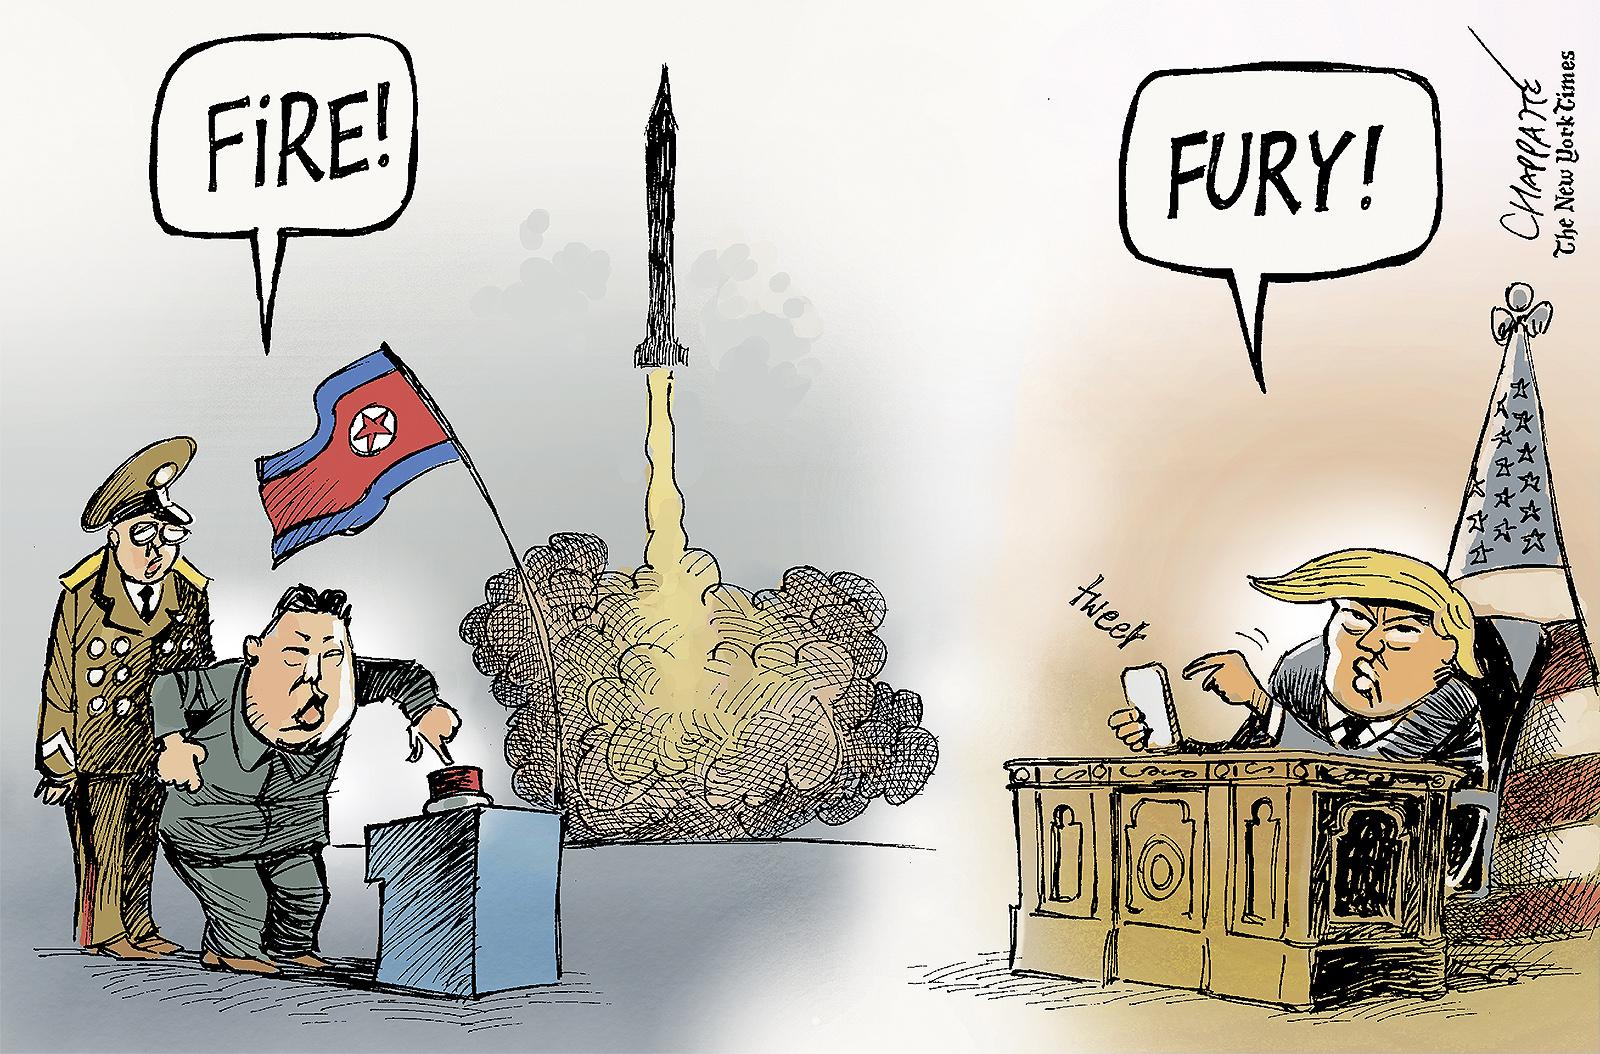 Tensions over North Korea